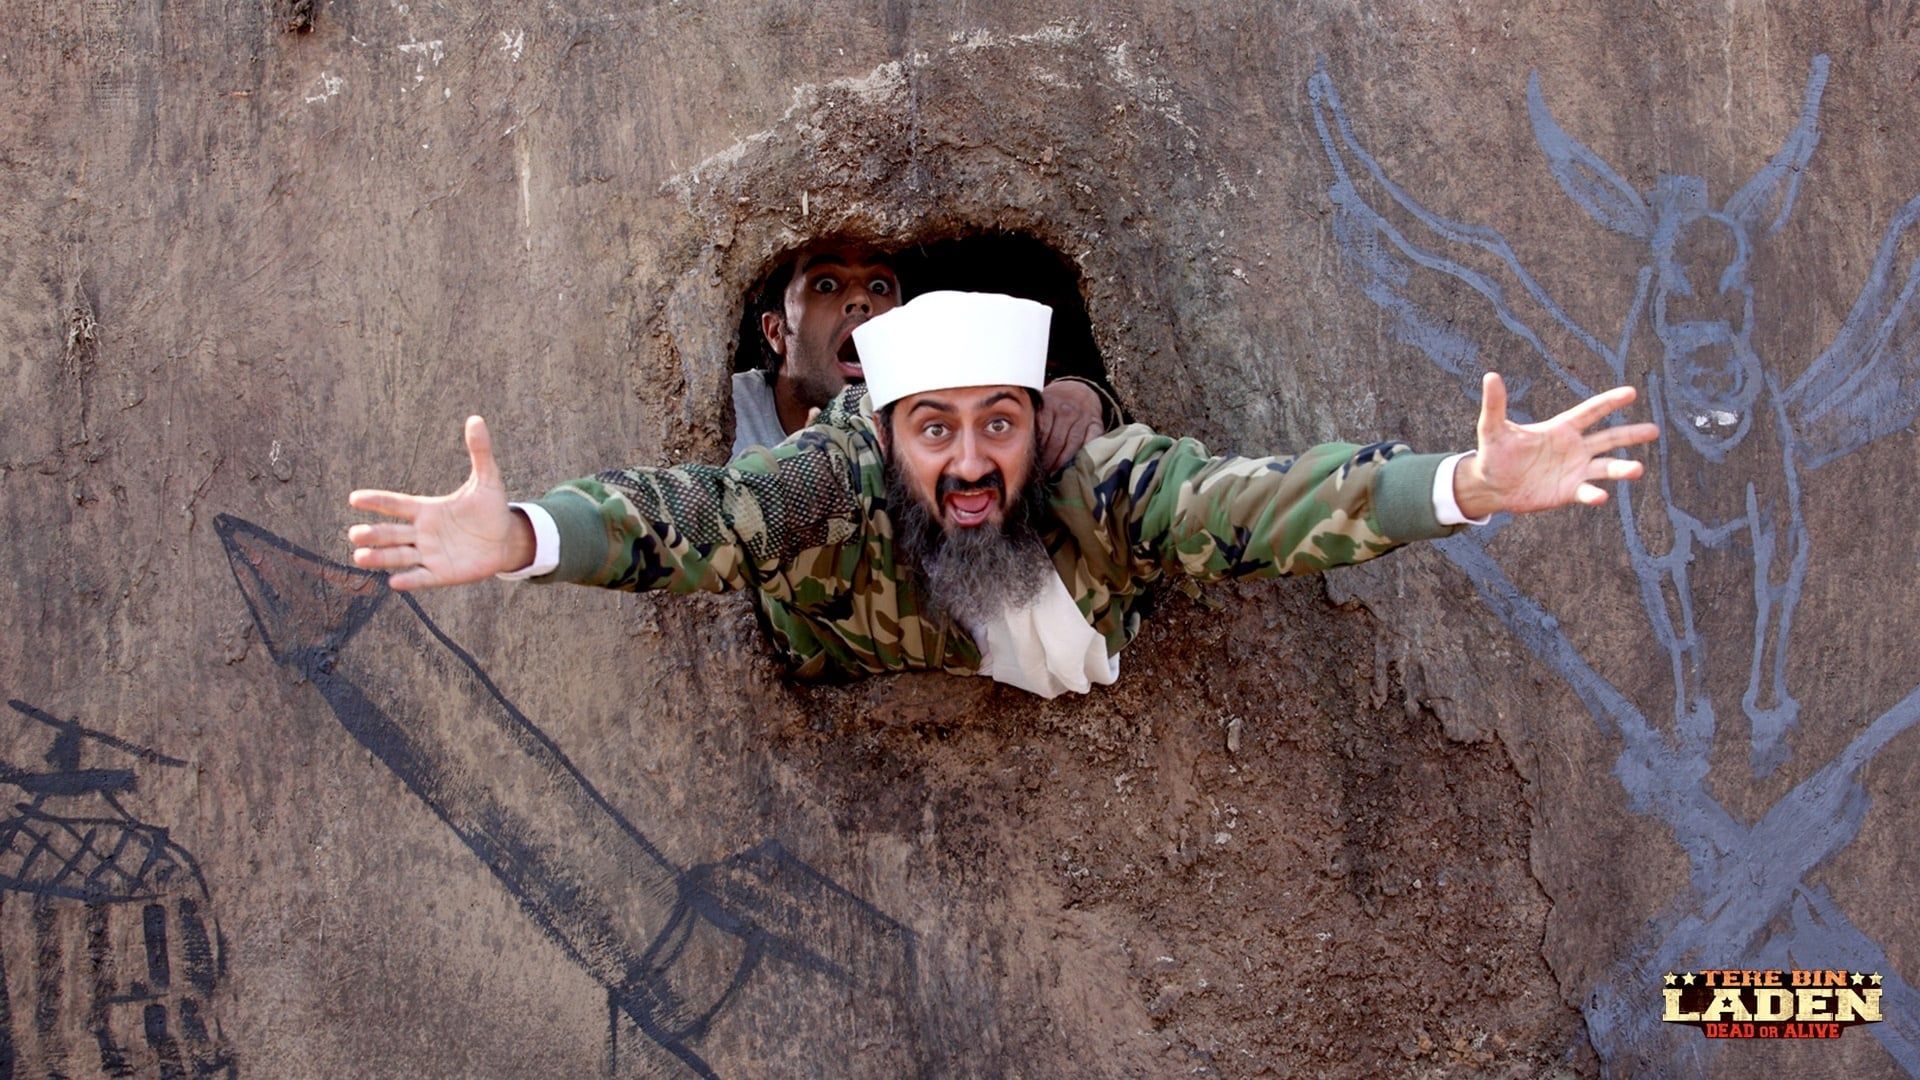 Tere Bin Laden: Dead or Alive background